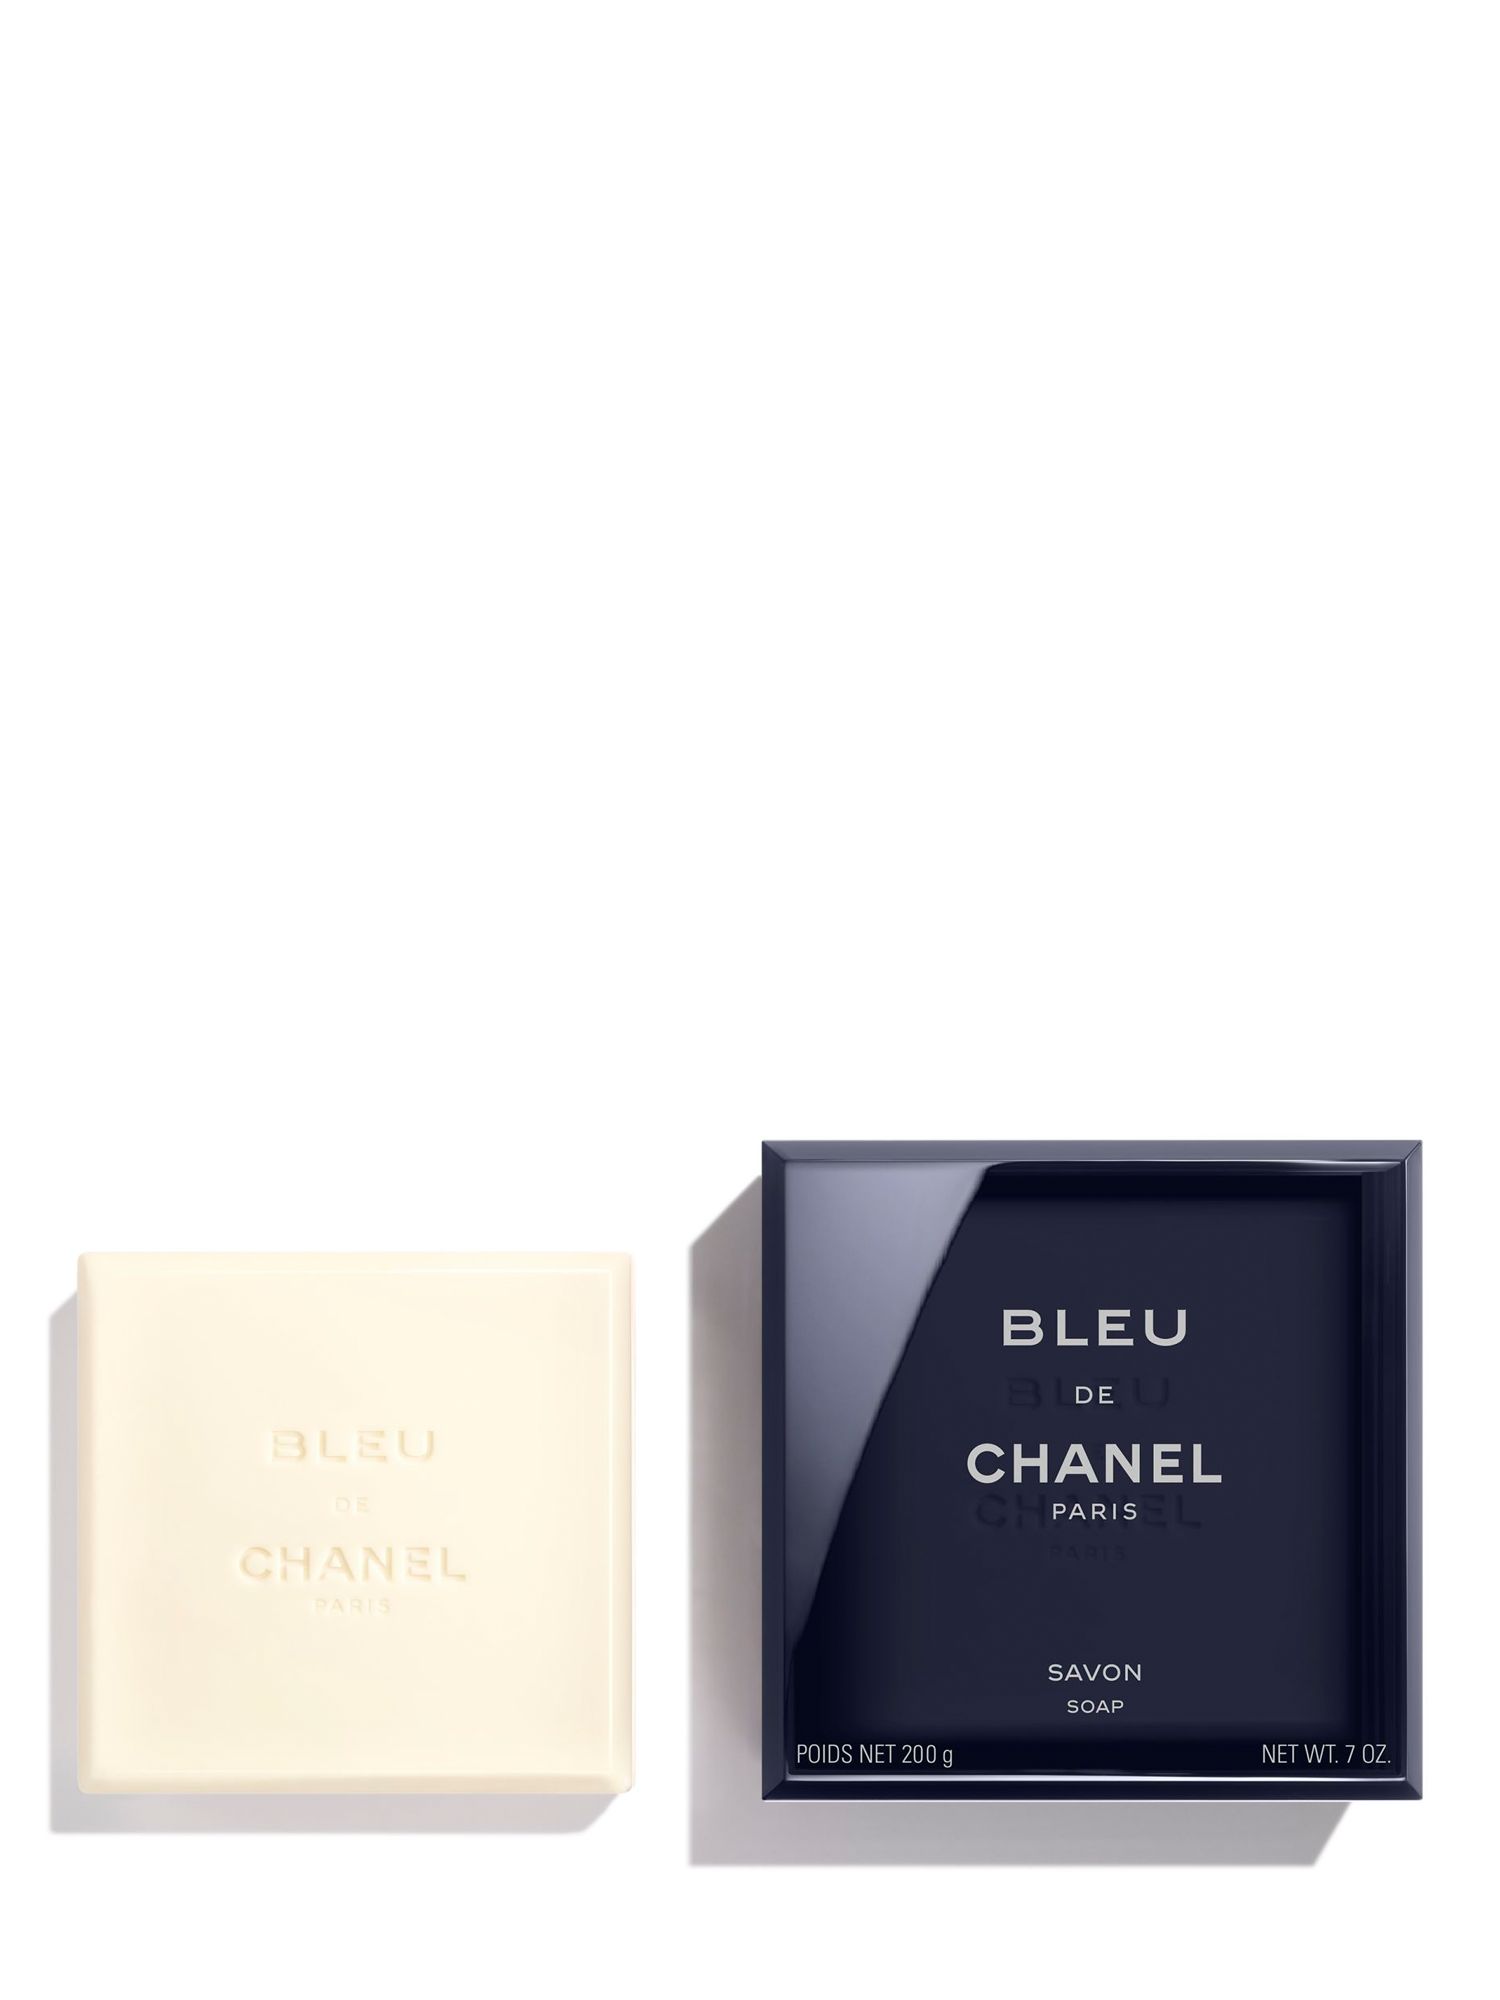 CHANEL Bleu De CHANEL Soap, 200g at John Lewis & Partners